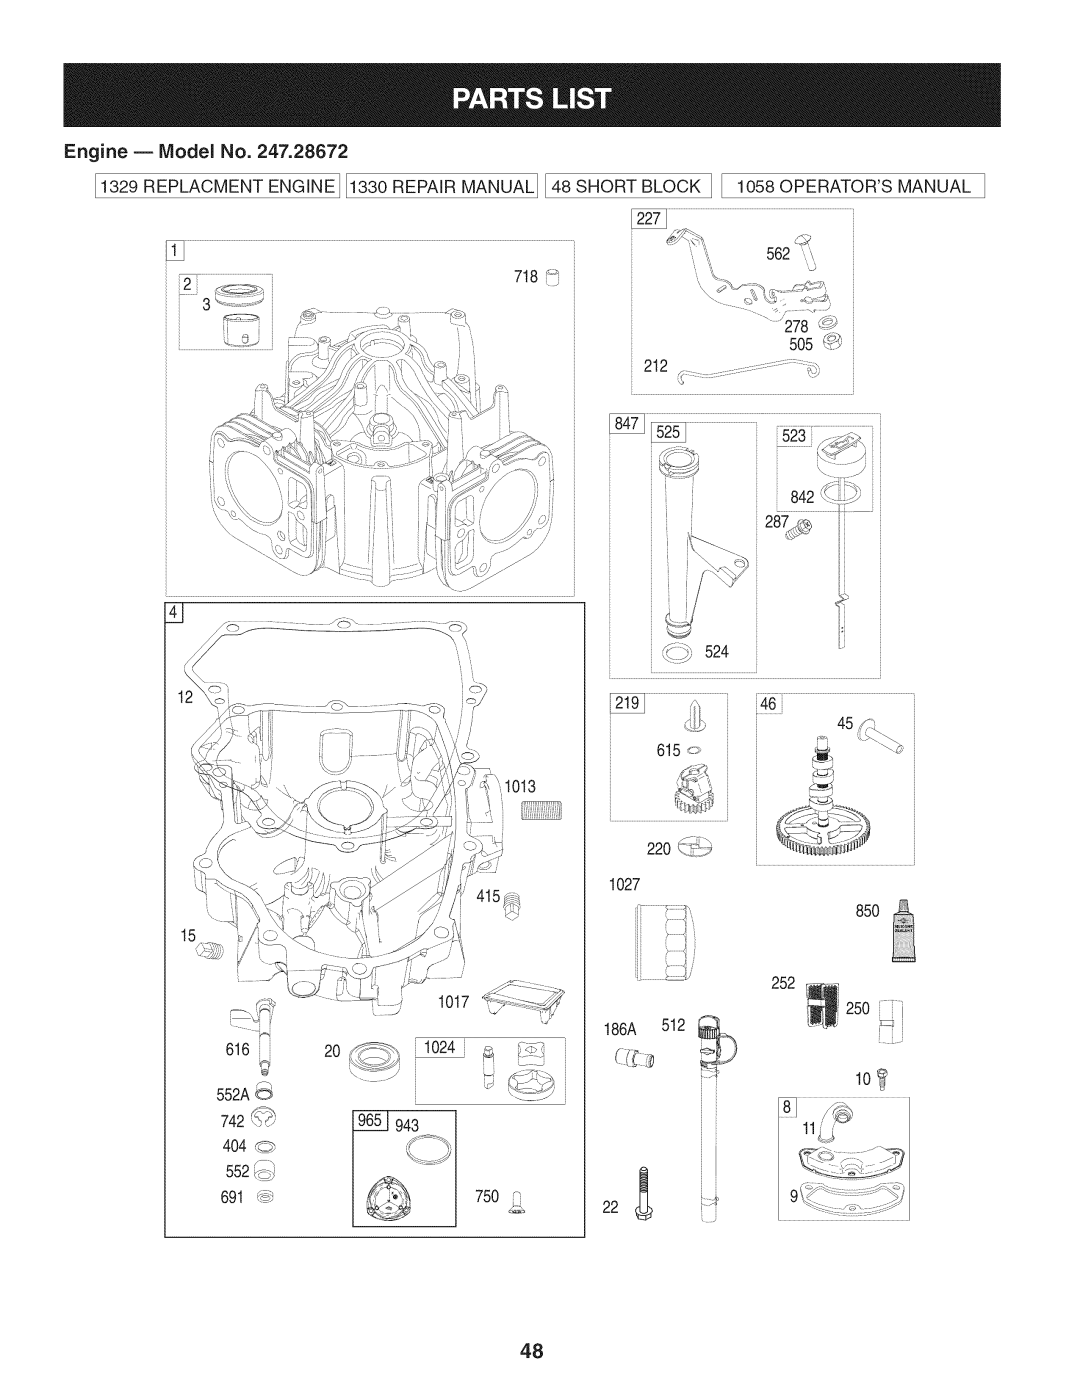 Craftsman PYT 9000, 247.28672 manual Engine B Model No, 505d_, i•46, 742 _ 